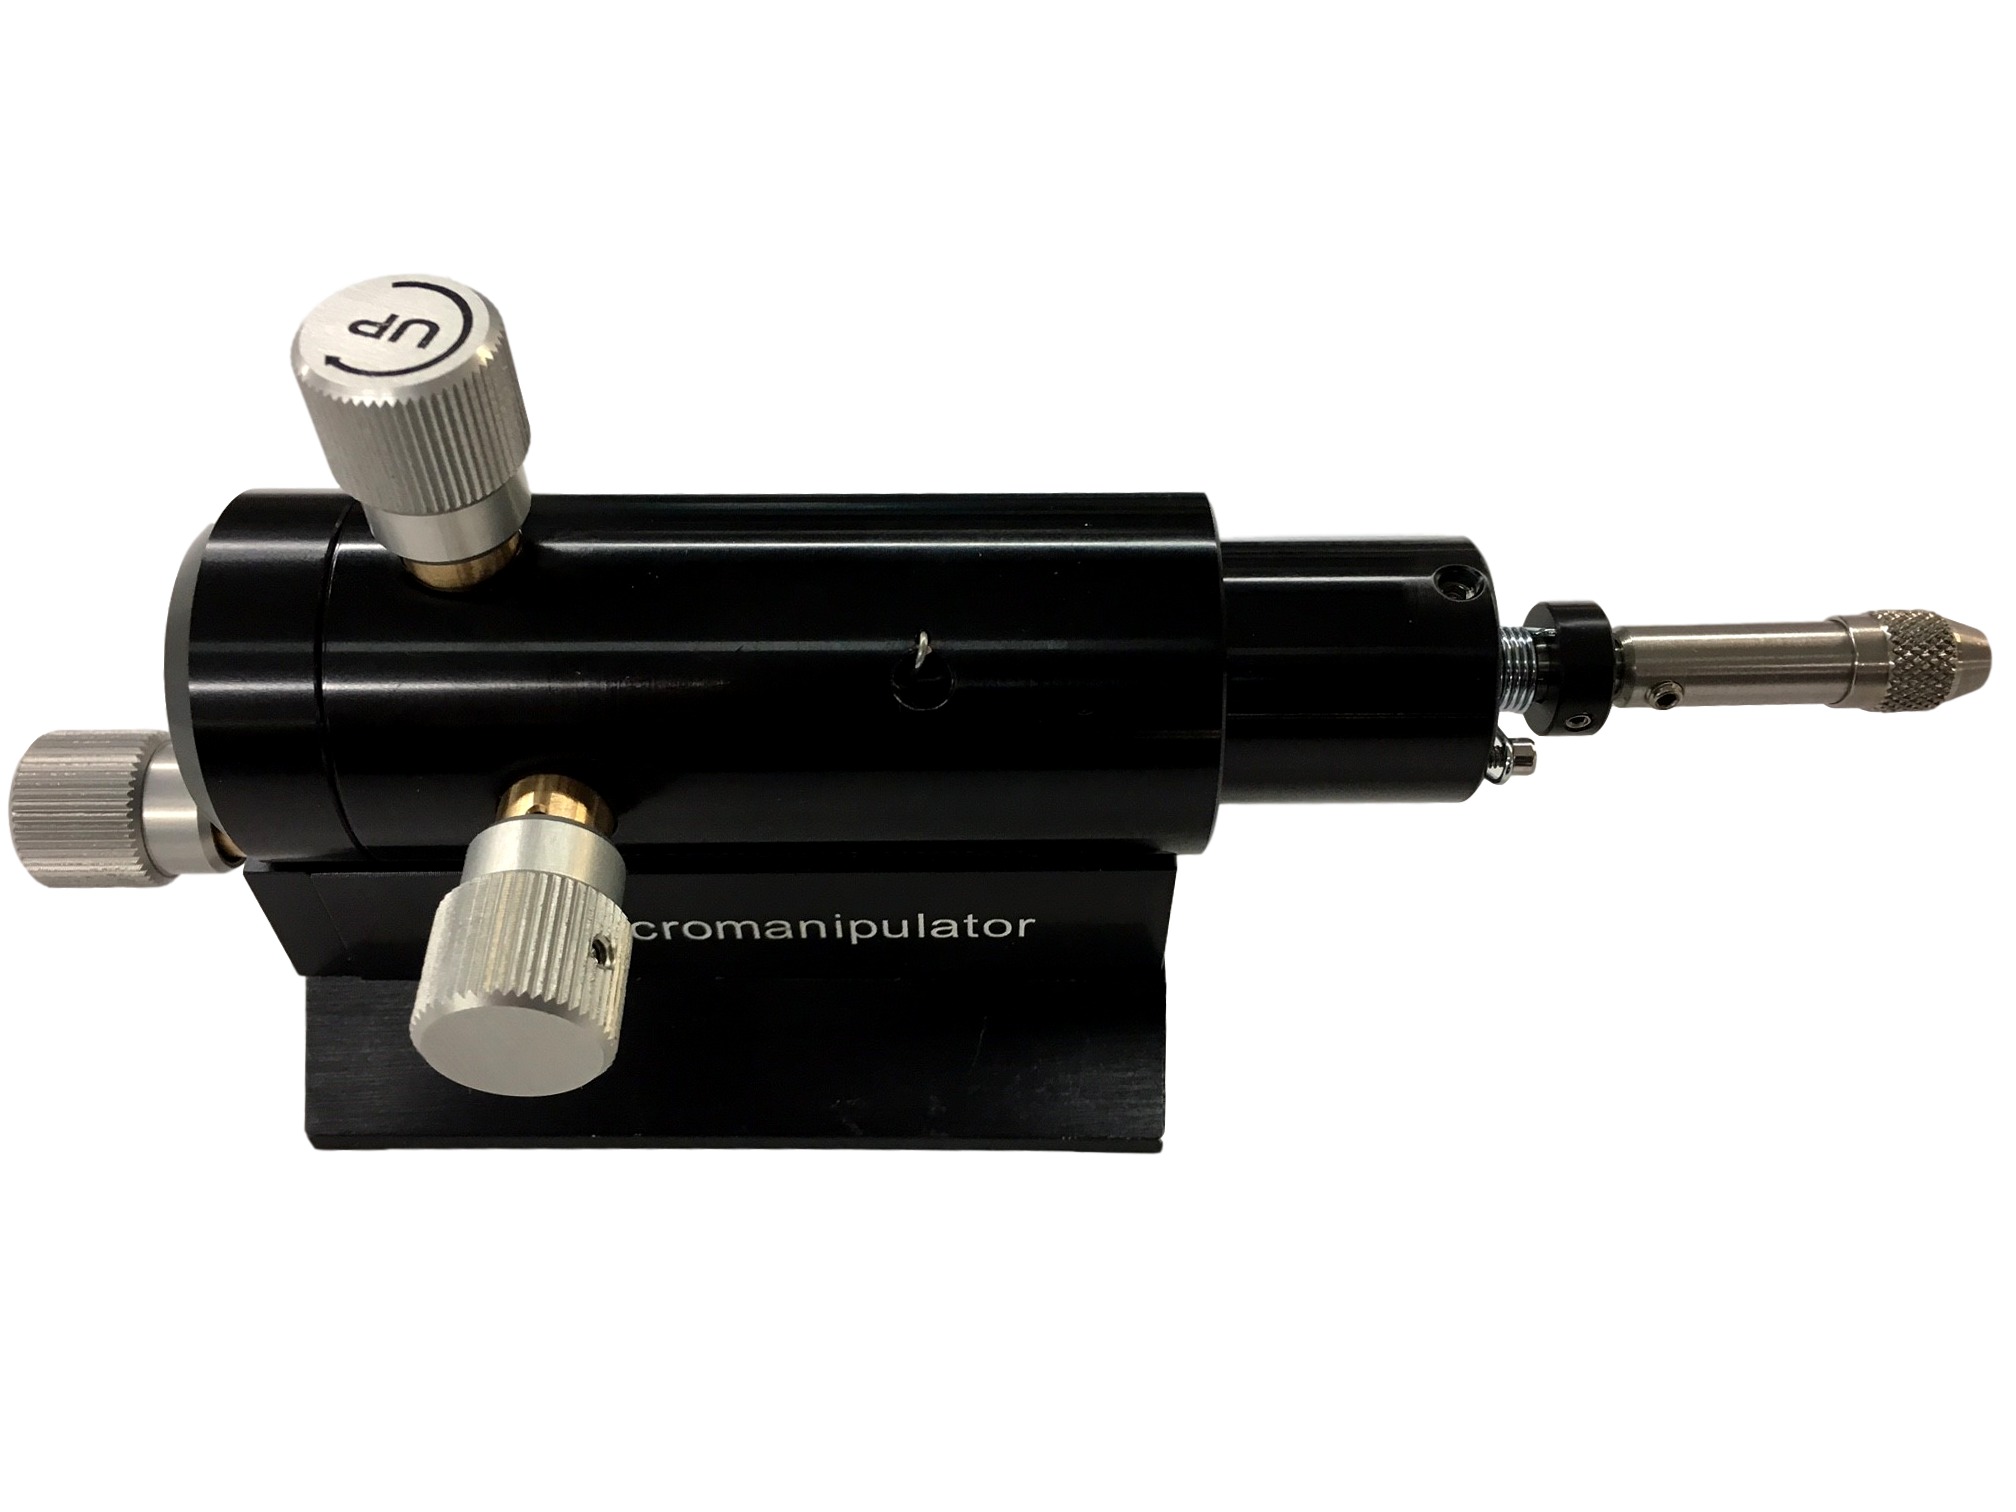 Right-Hand Knobs Micromanipulator Model 550 X-Y-Z Probe Positioner Manipulator 